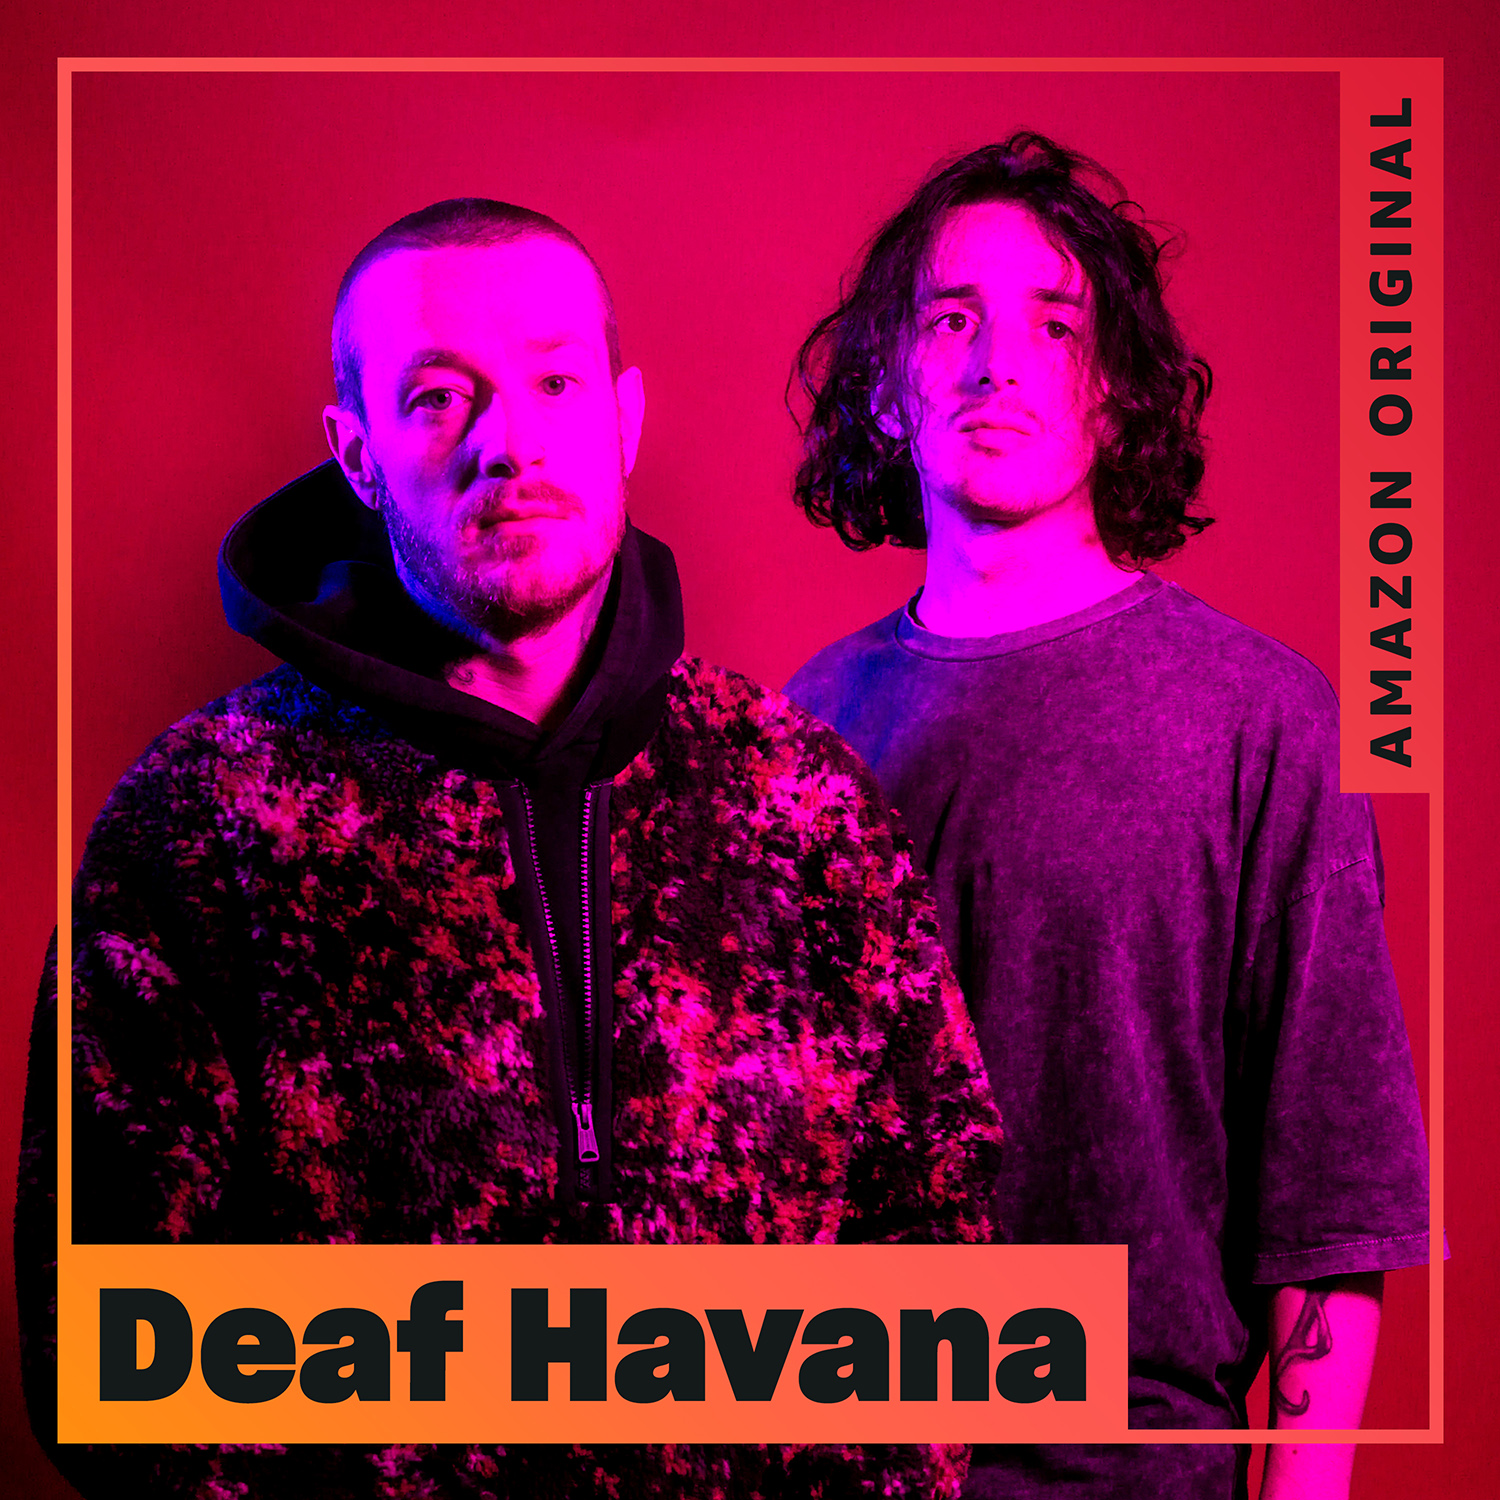 Artwork for Amazon Original Series featuring Deaf Havana